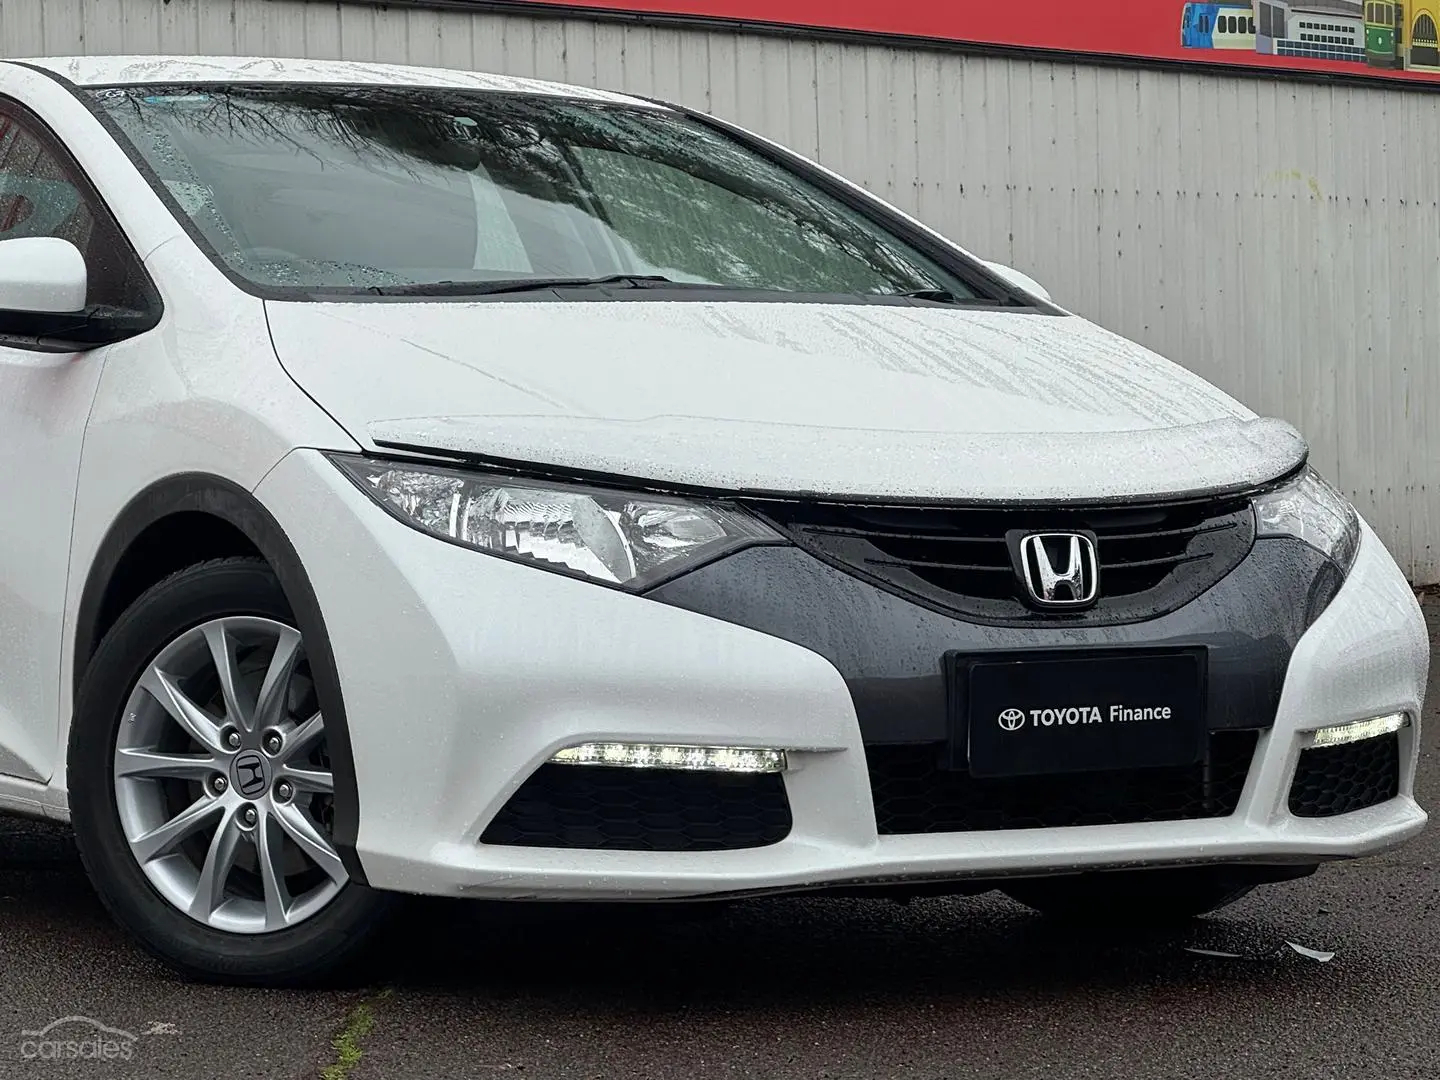 2013 Honda Civic Image 2